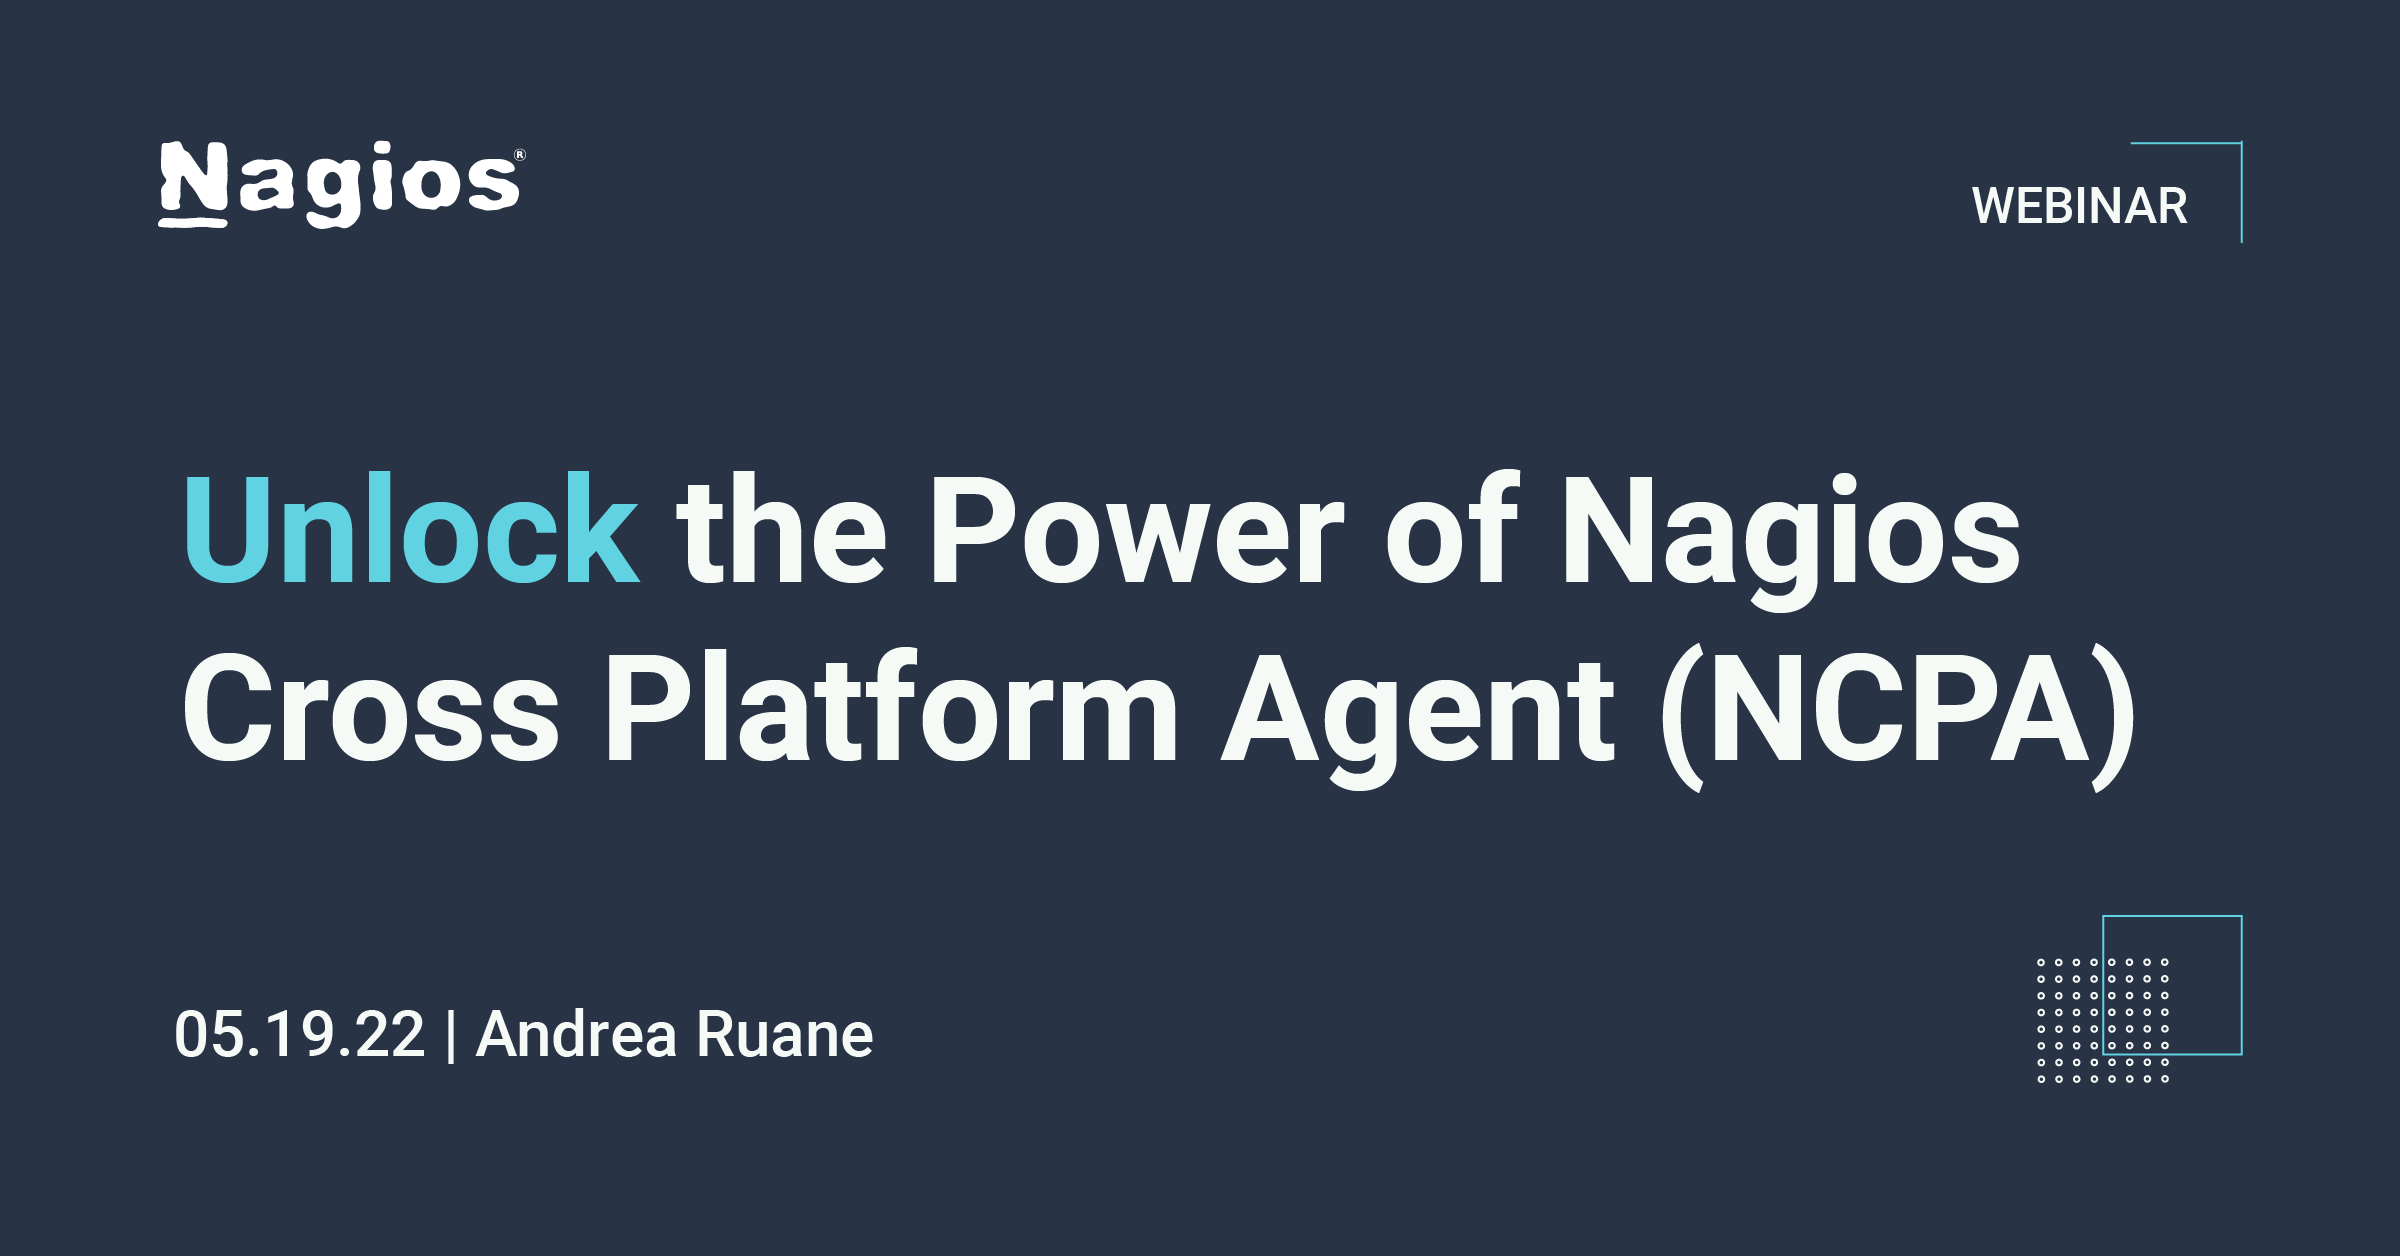 nagios webinars: unlock the power of nagios cross platform agent ncpa